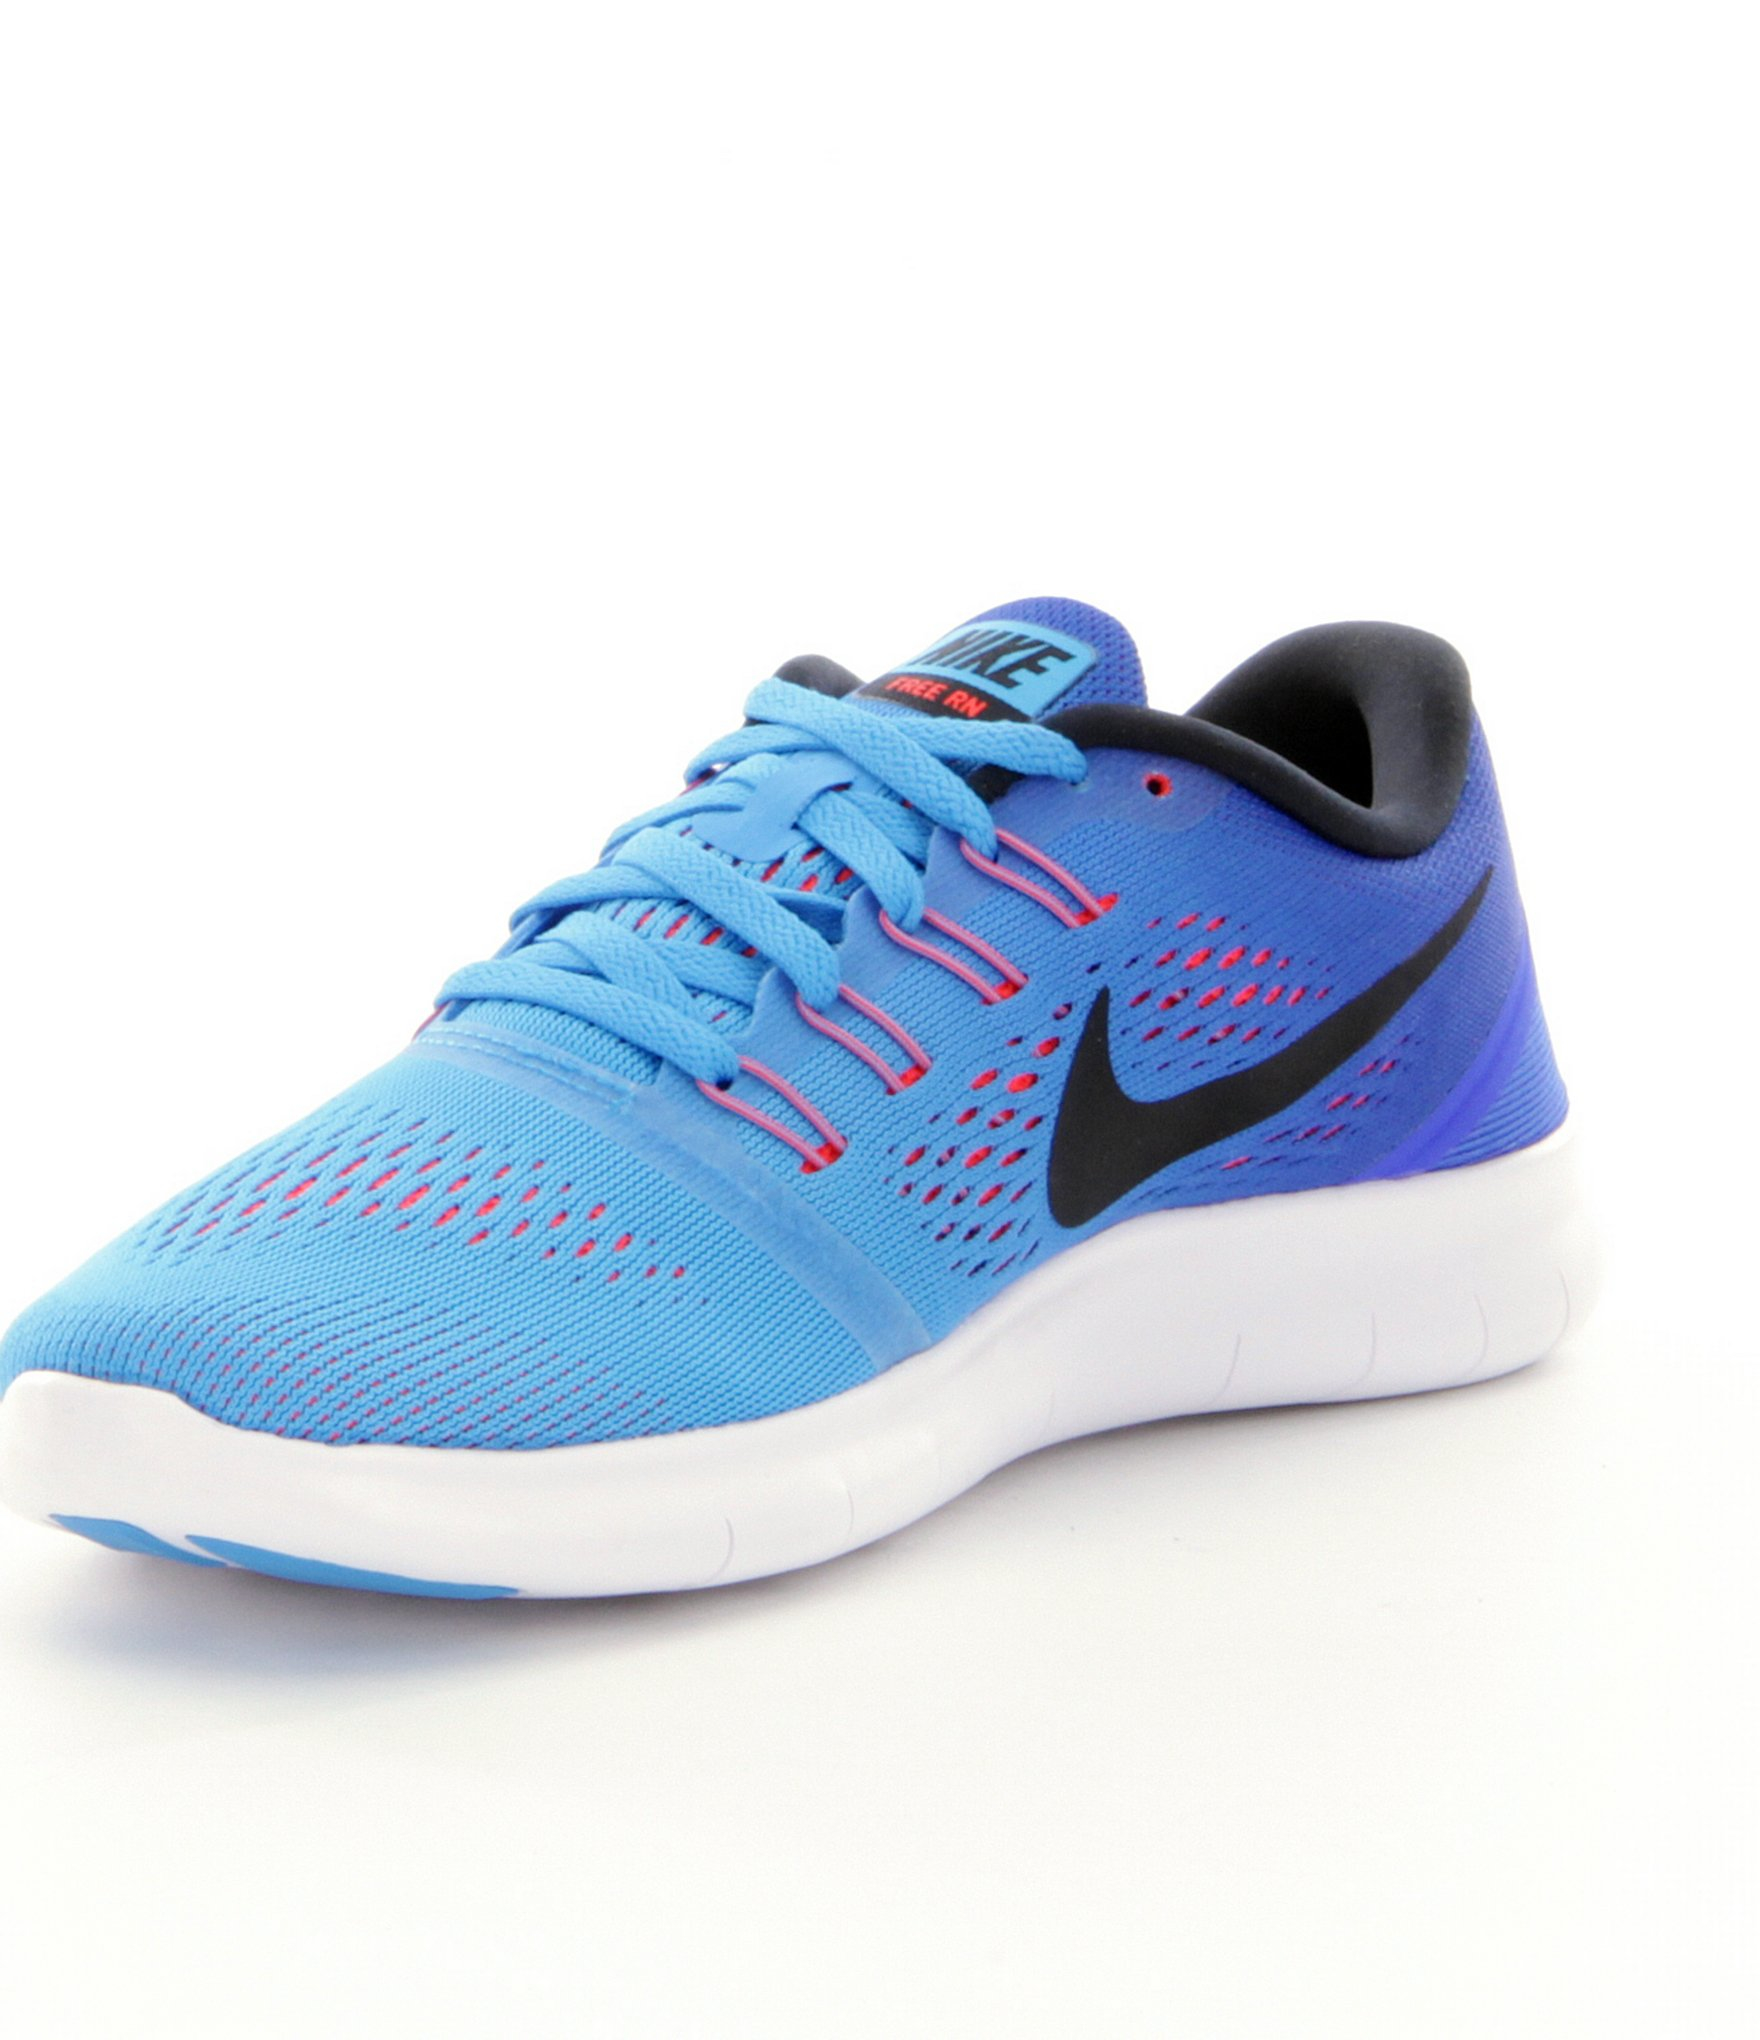 Lyst - Nike Women ́s Free Run Running Shoes in Blue